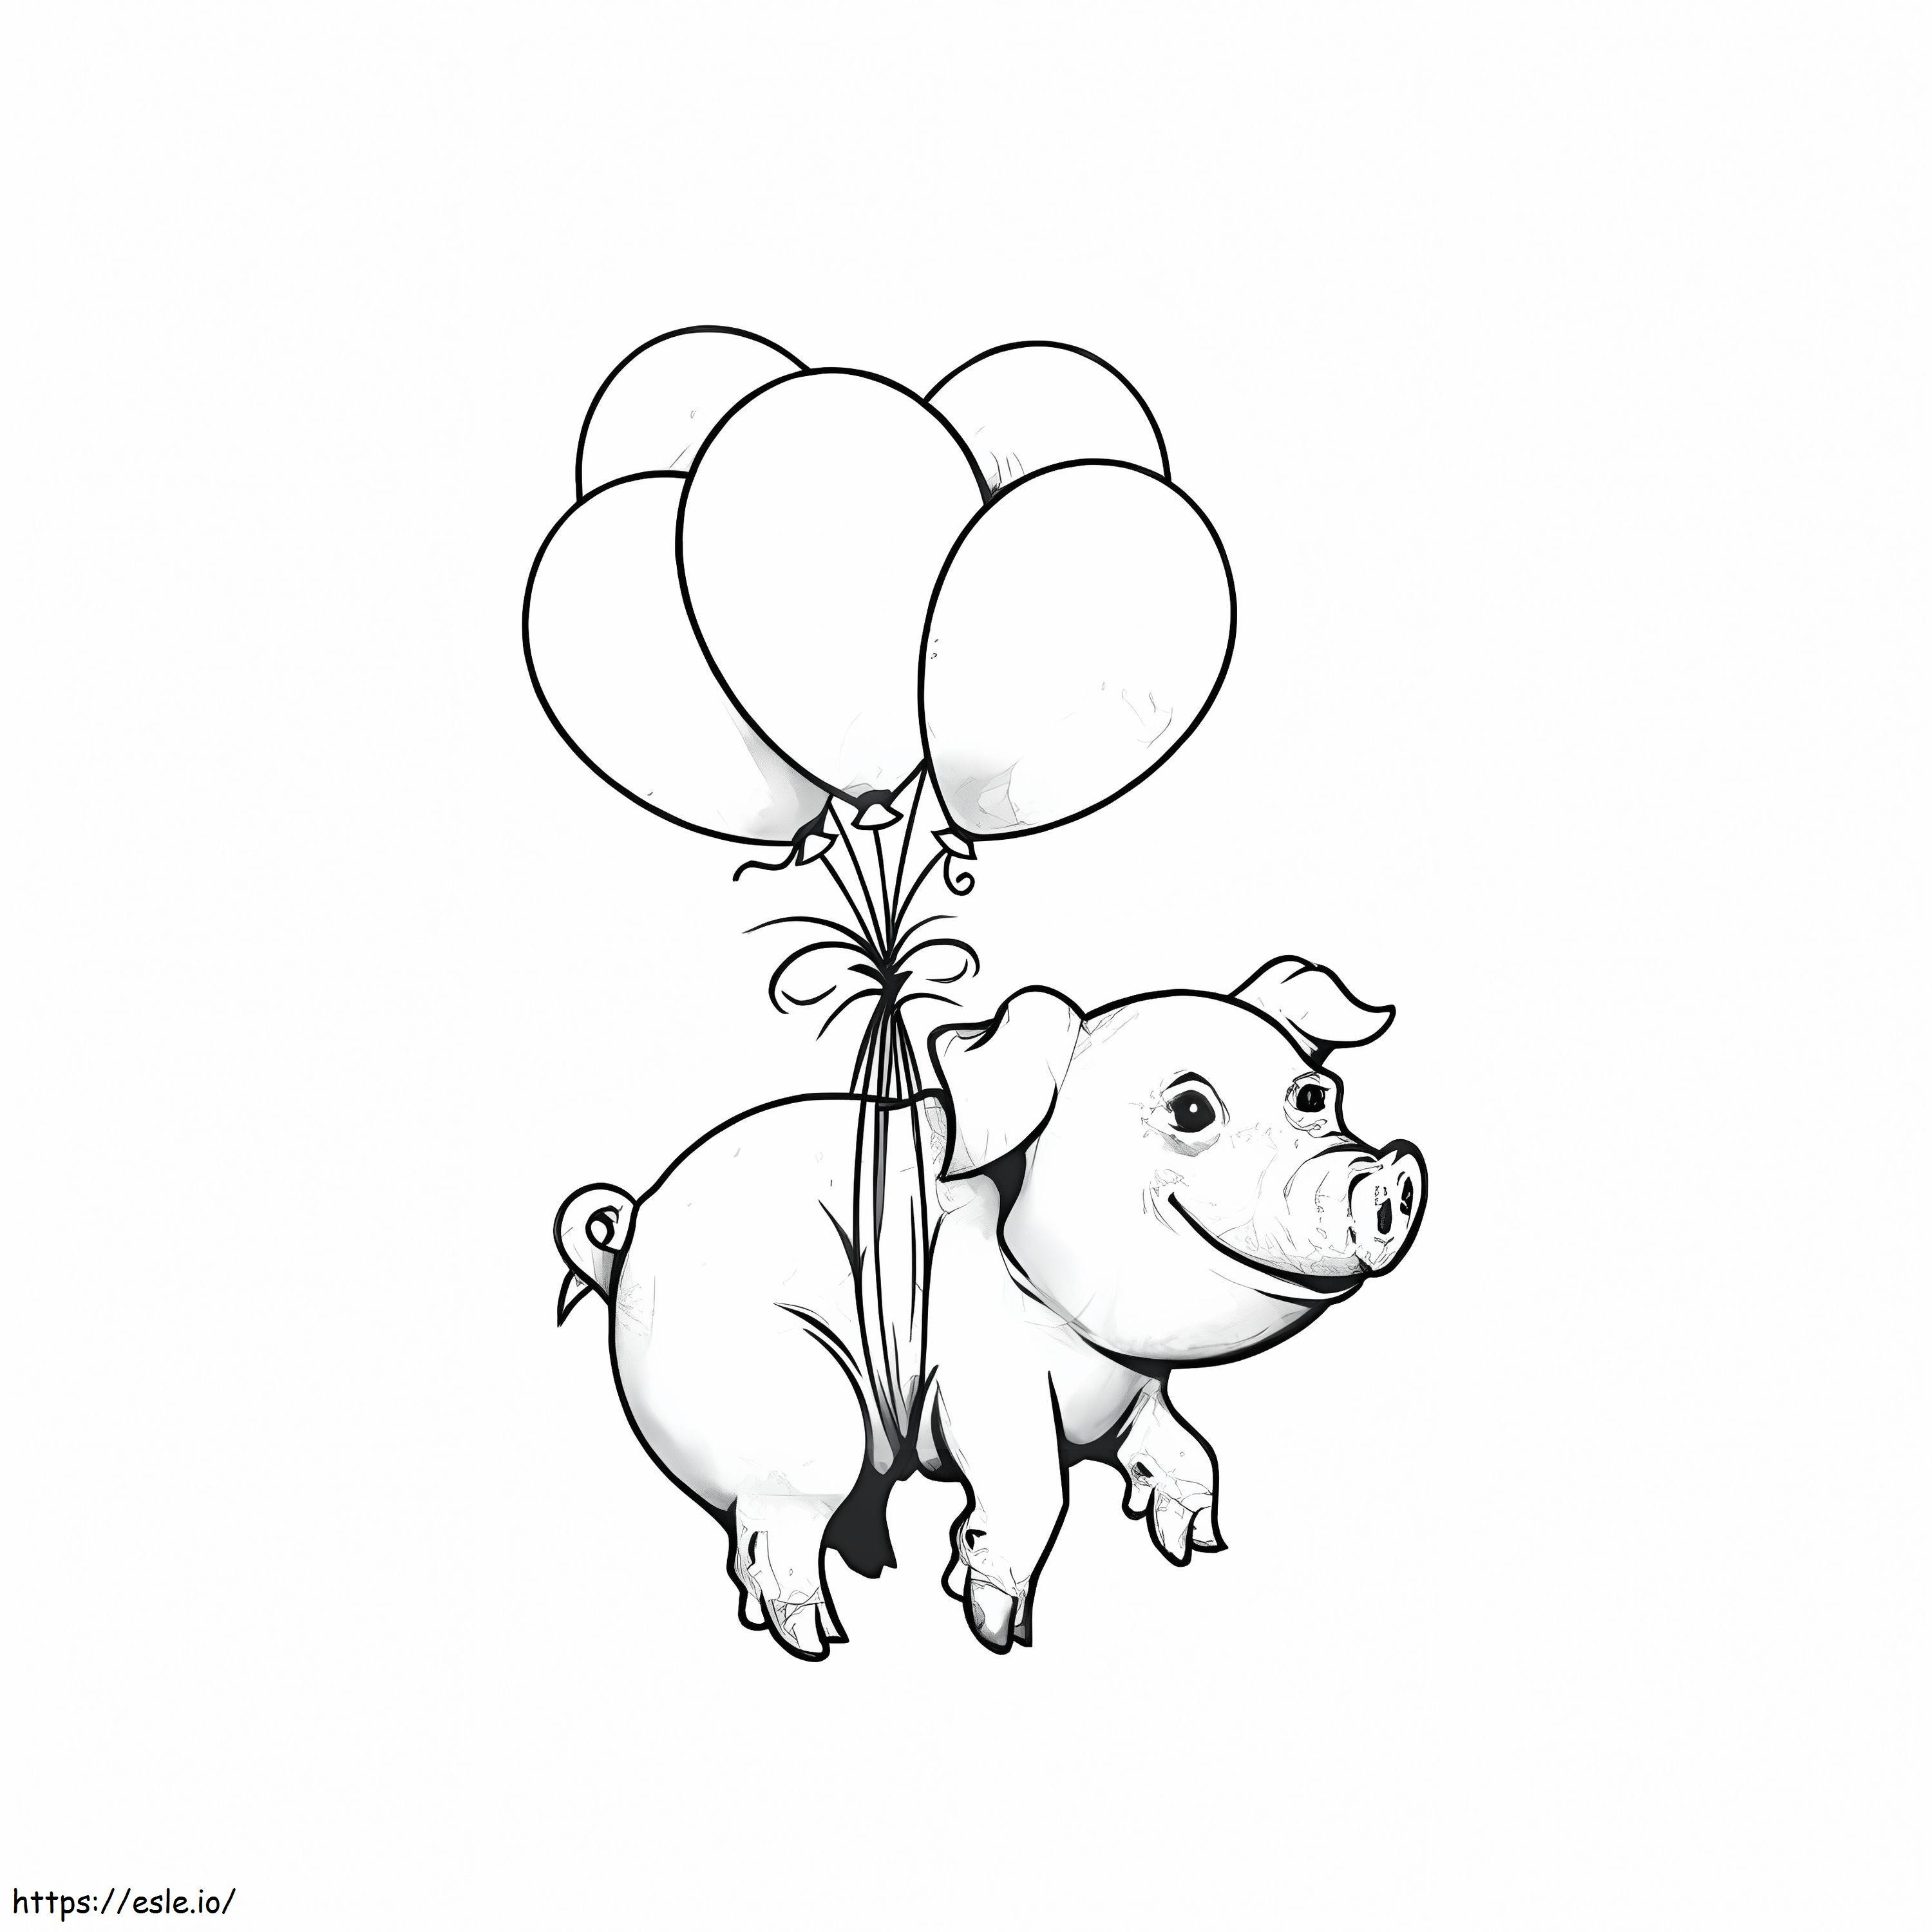 Cerdo tatuado con globos para colorear